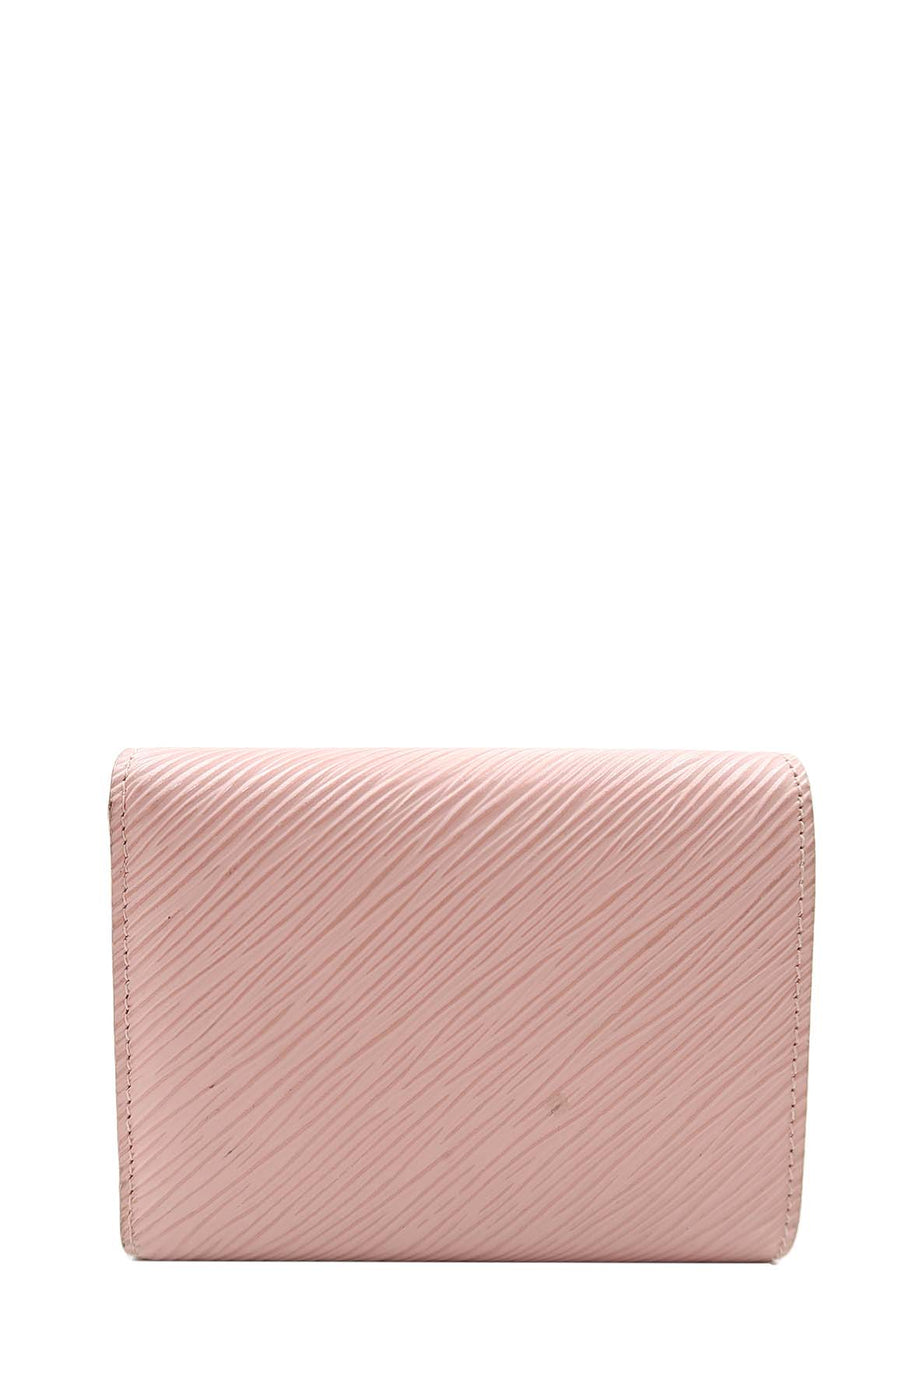 Laulayluxury - Louis Vuitton Twist Wallet in baby pink Epi